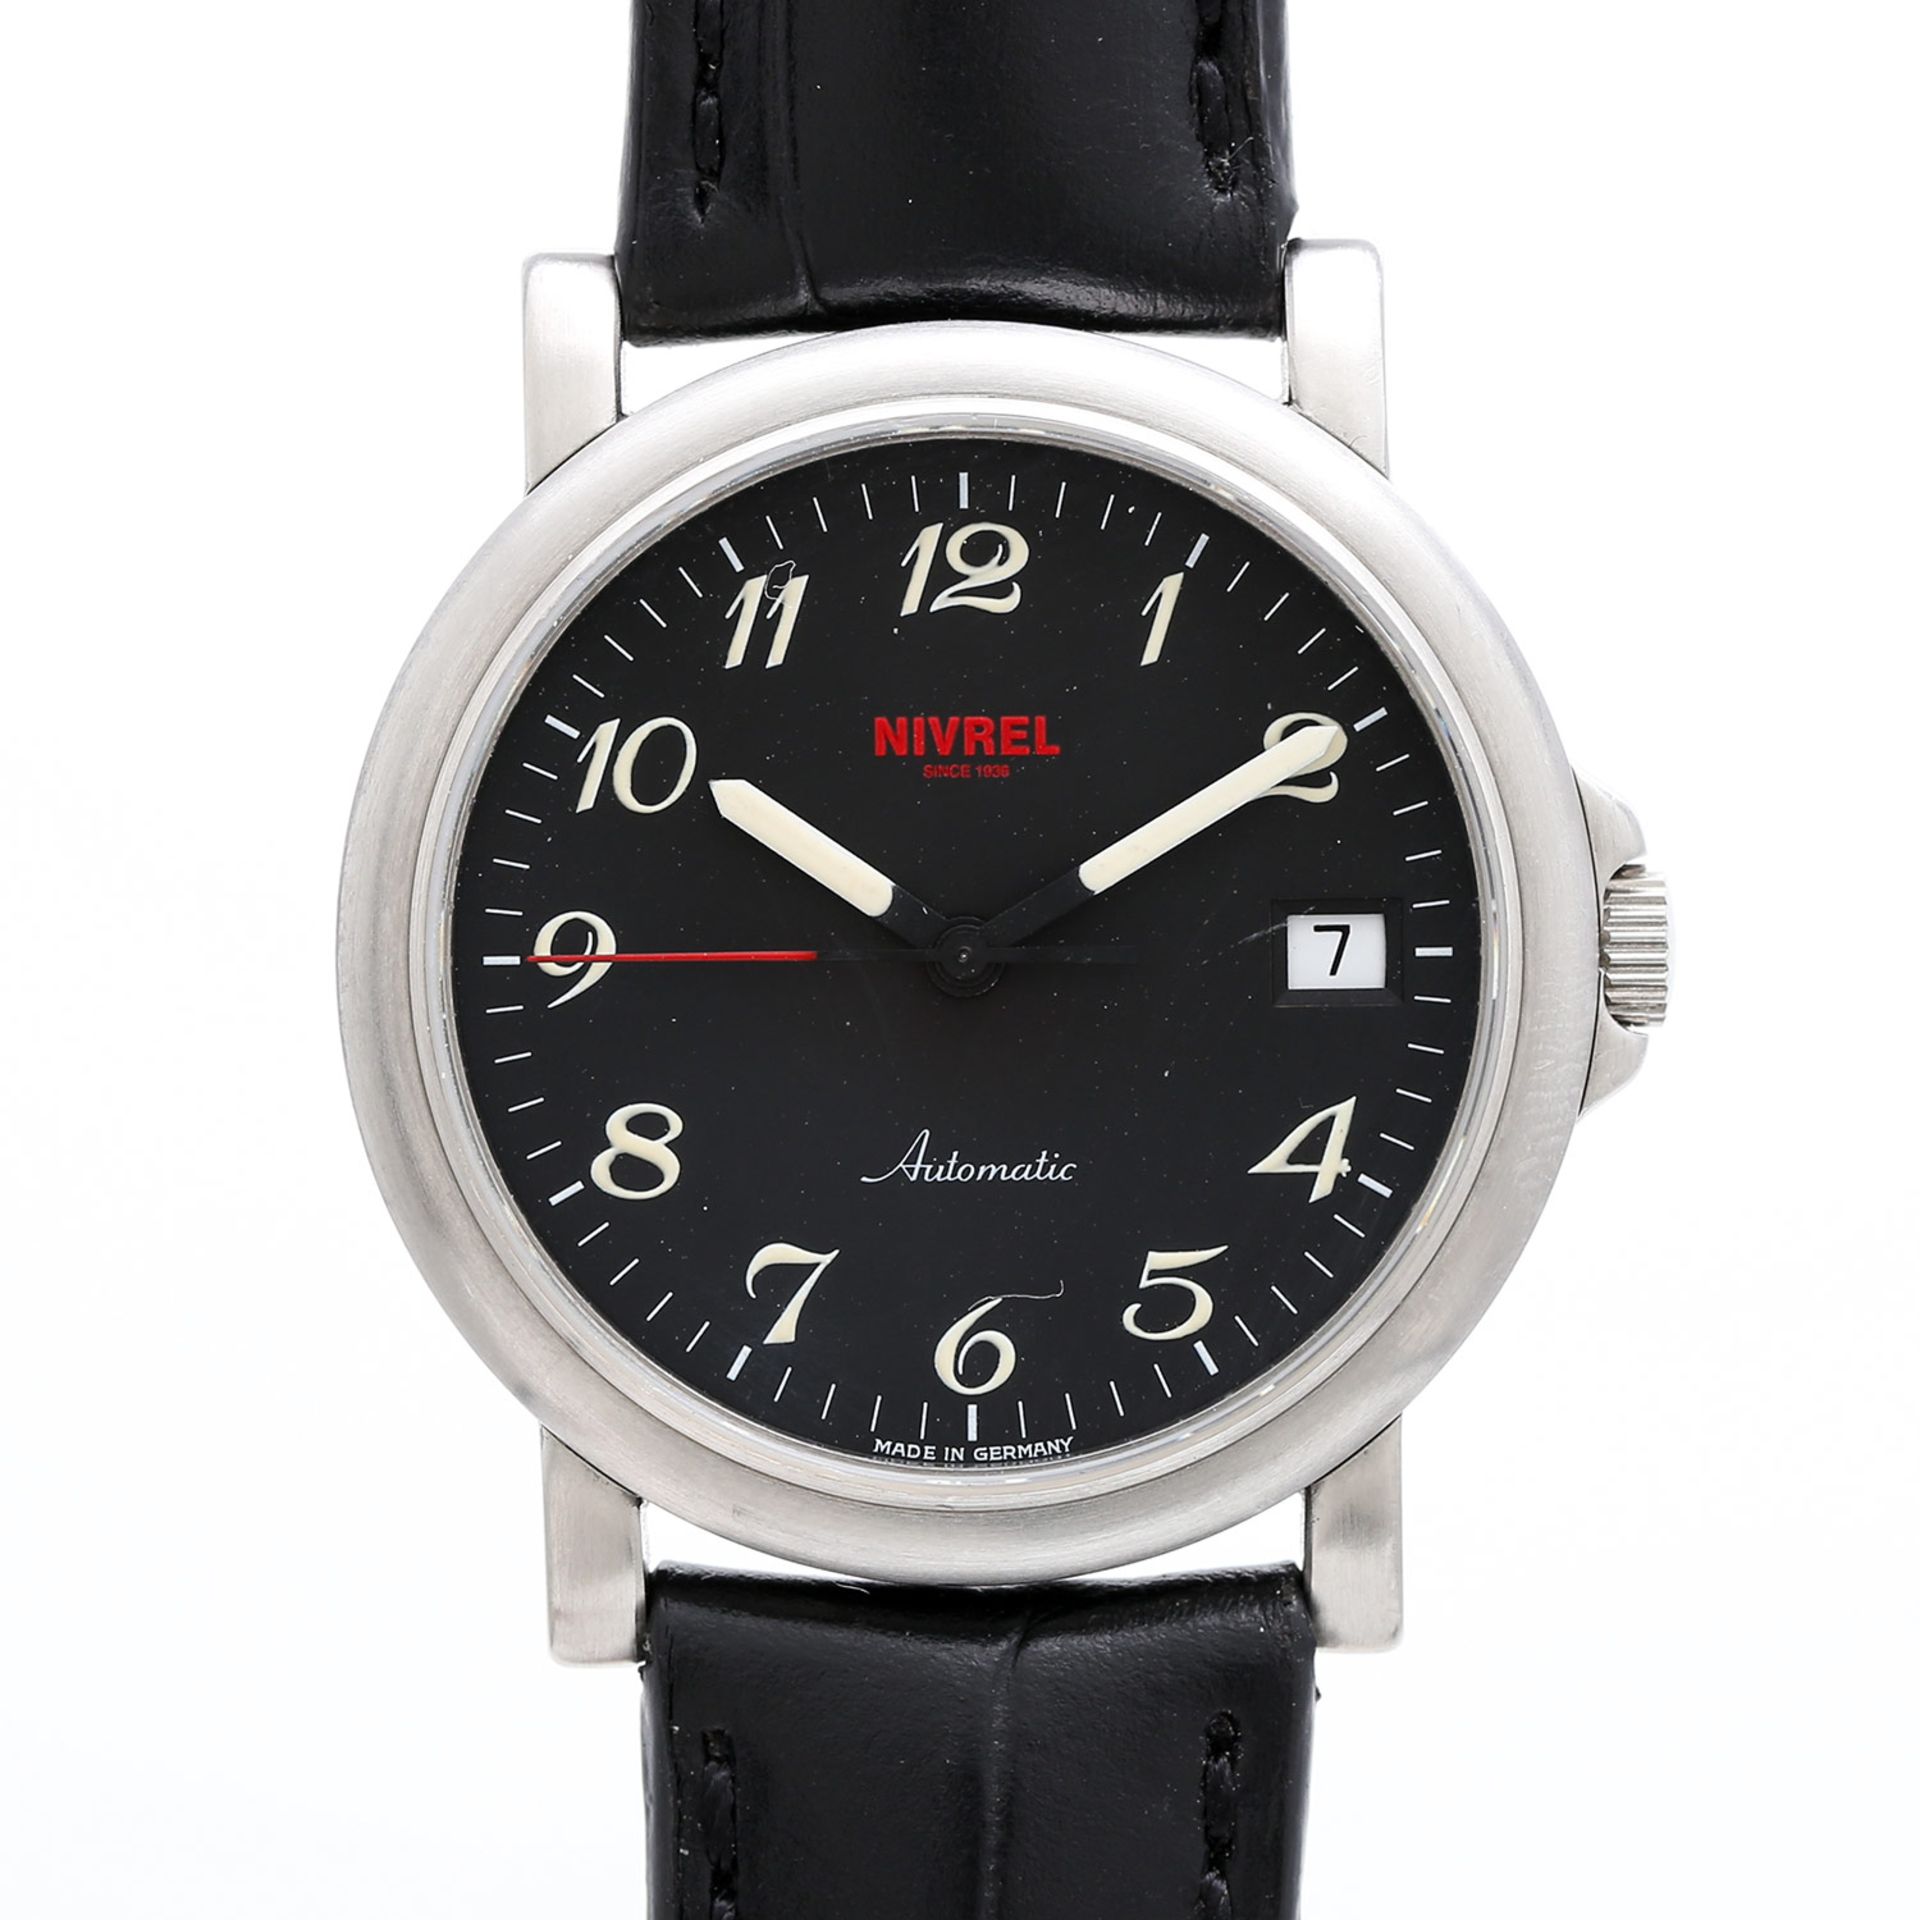 NIVREL Armbanduhr, Edelstahl, Automatic-Werk Cal. ETA 2824. Lederband mit Stiftschließe. Mit